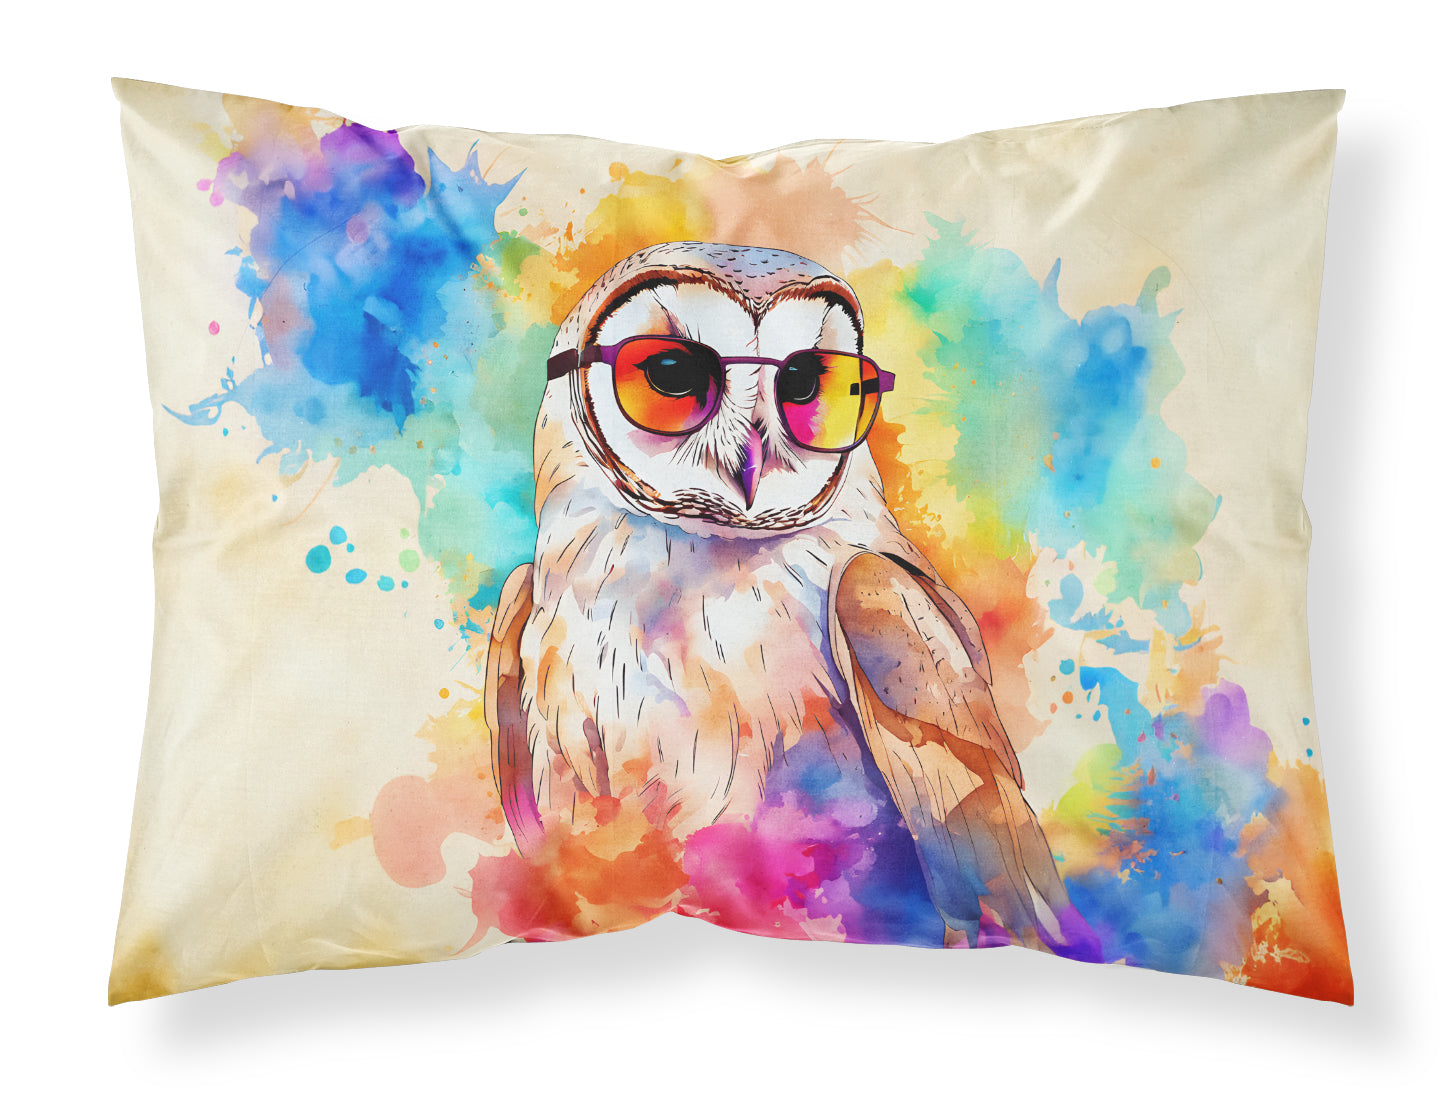 Buy this Hippie Animal Barn Owl Standard Pillowcase